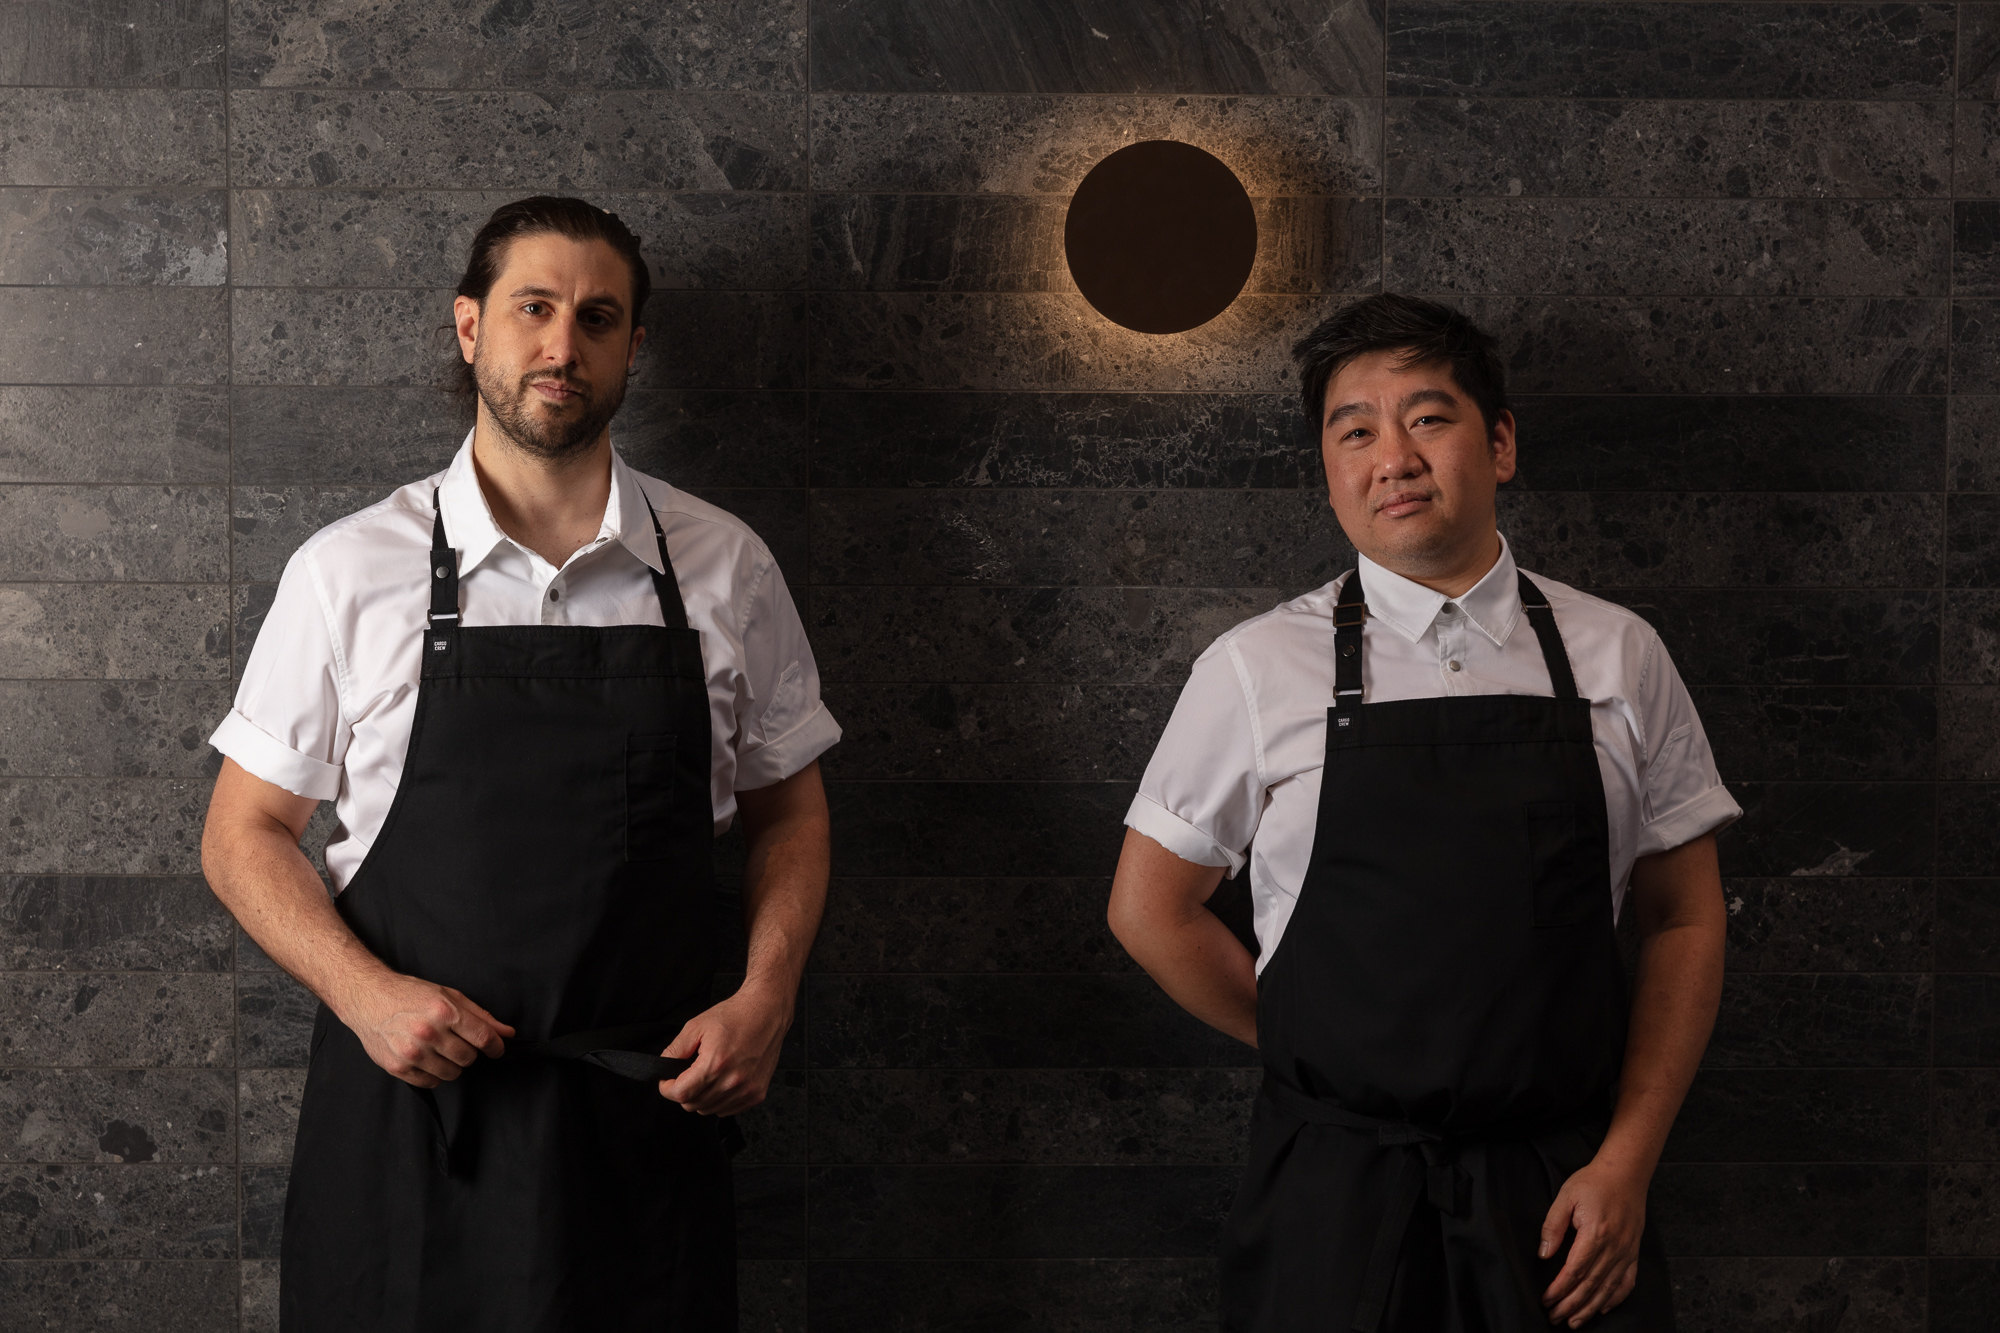 Next Hotel chefs Danny Natoli and Adrian Li